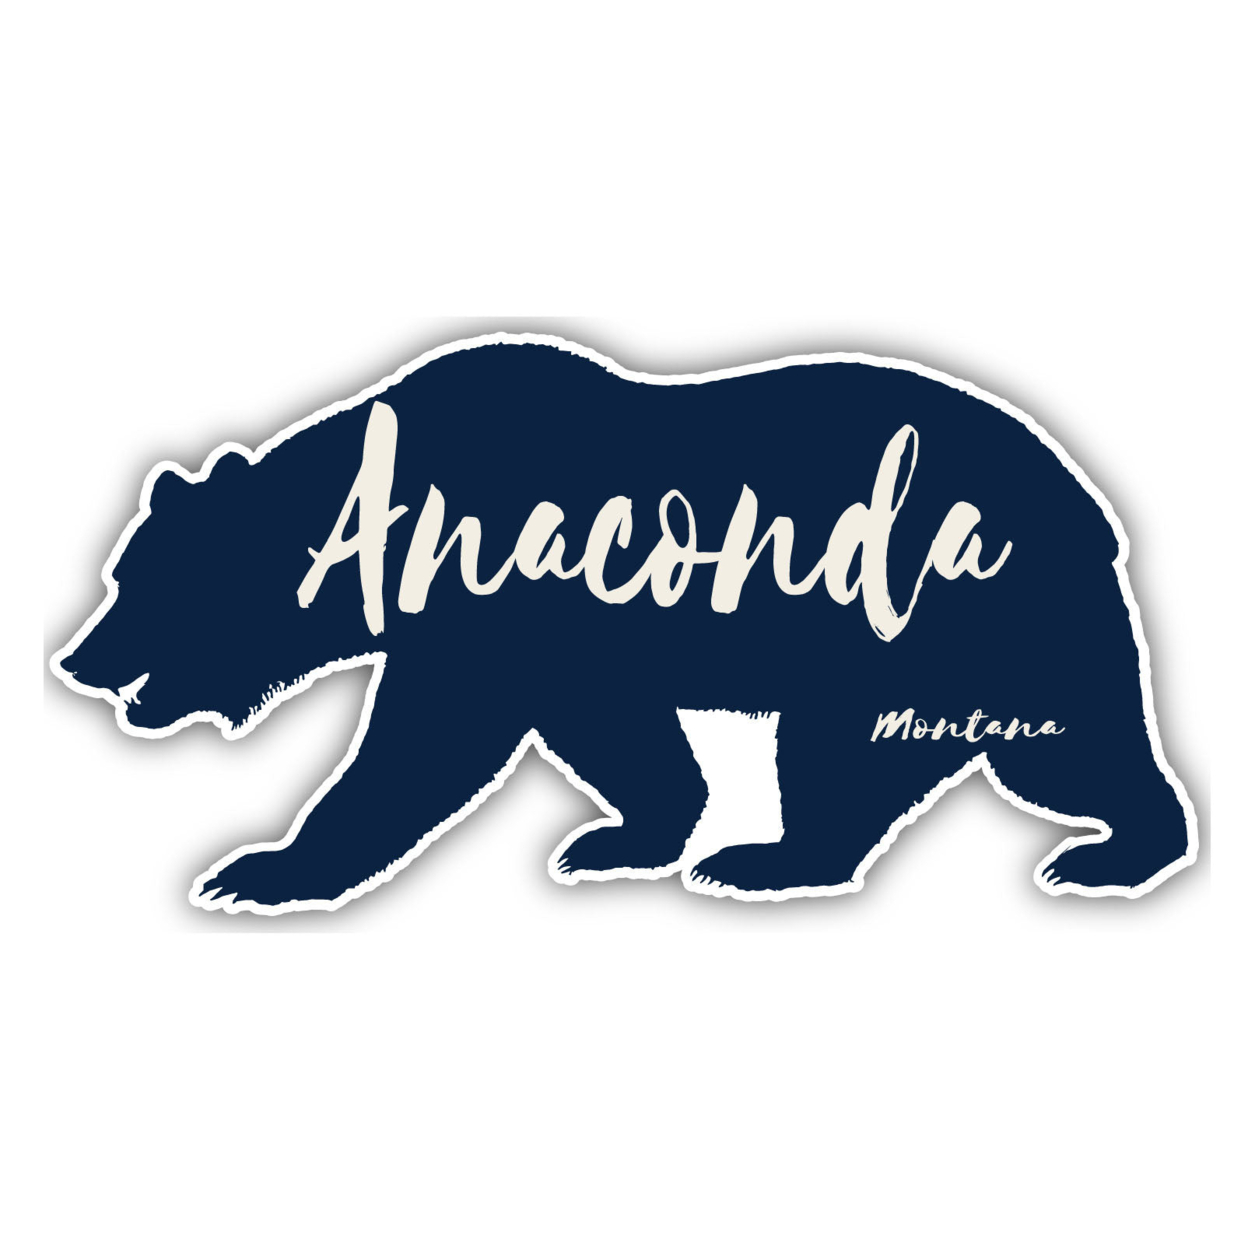 Anaconda Montana Souvenir Decorative Stickers (Choose Theme And Size) - 4-Pack, 12-Inch, Bear